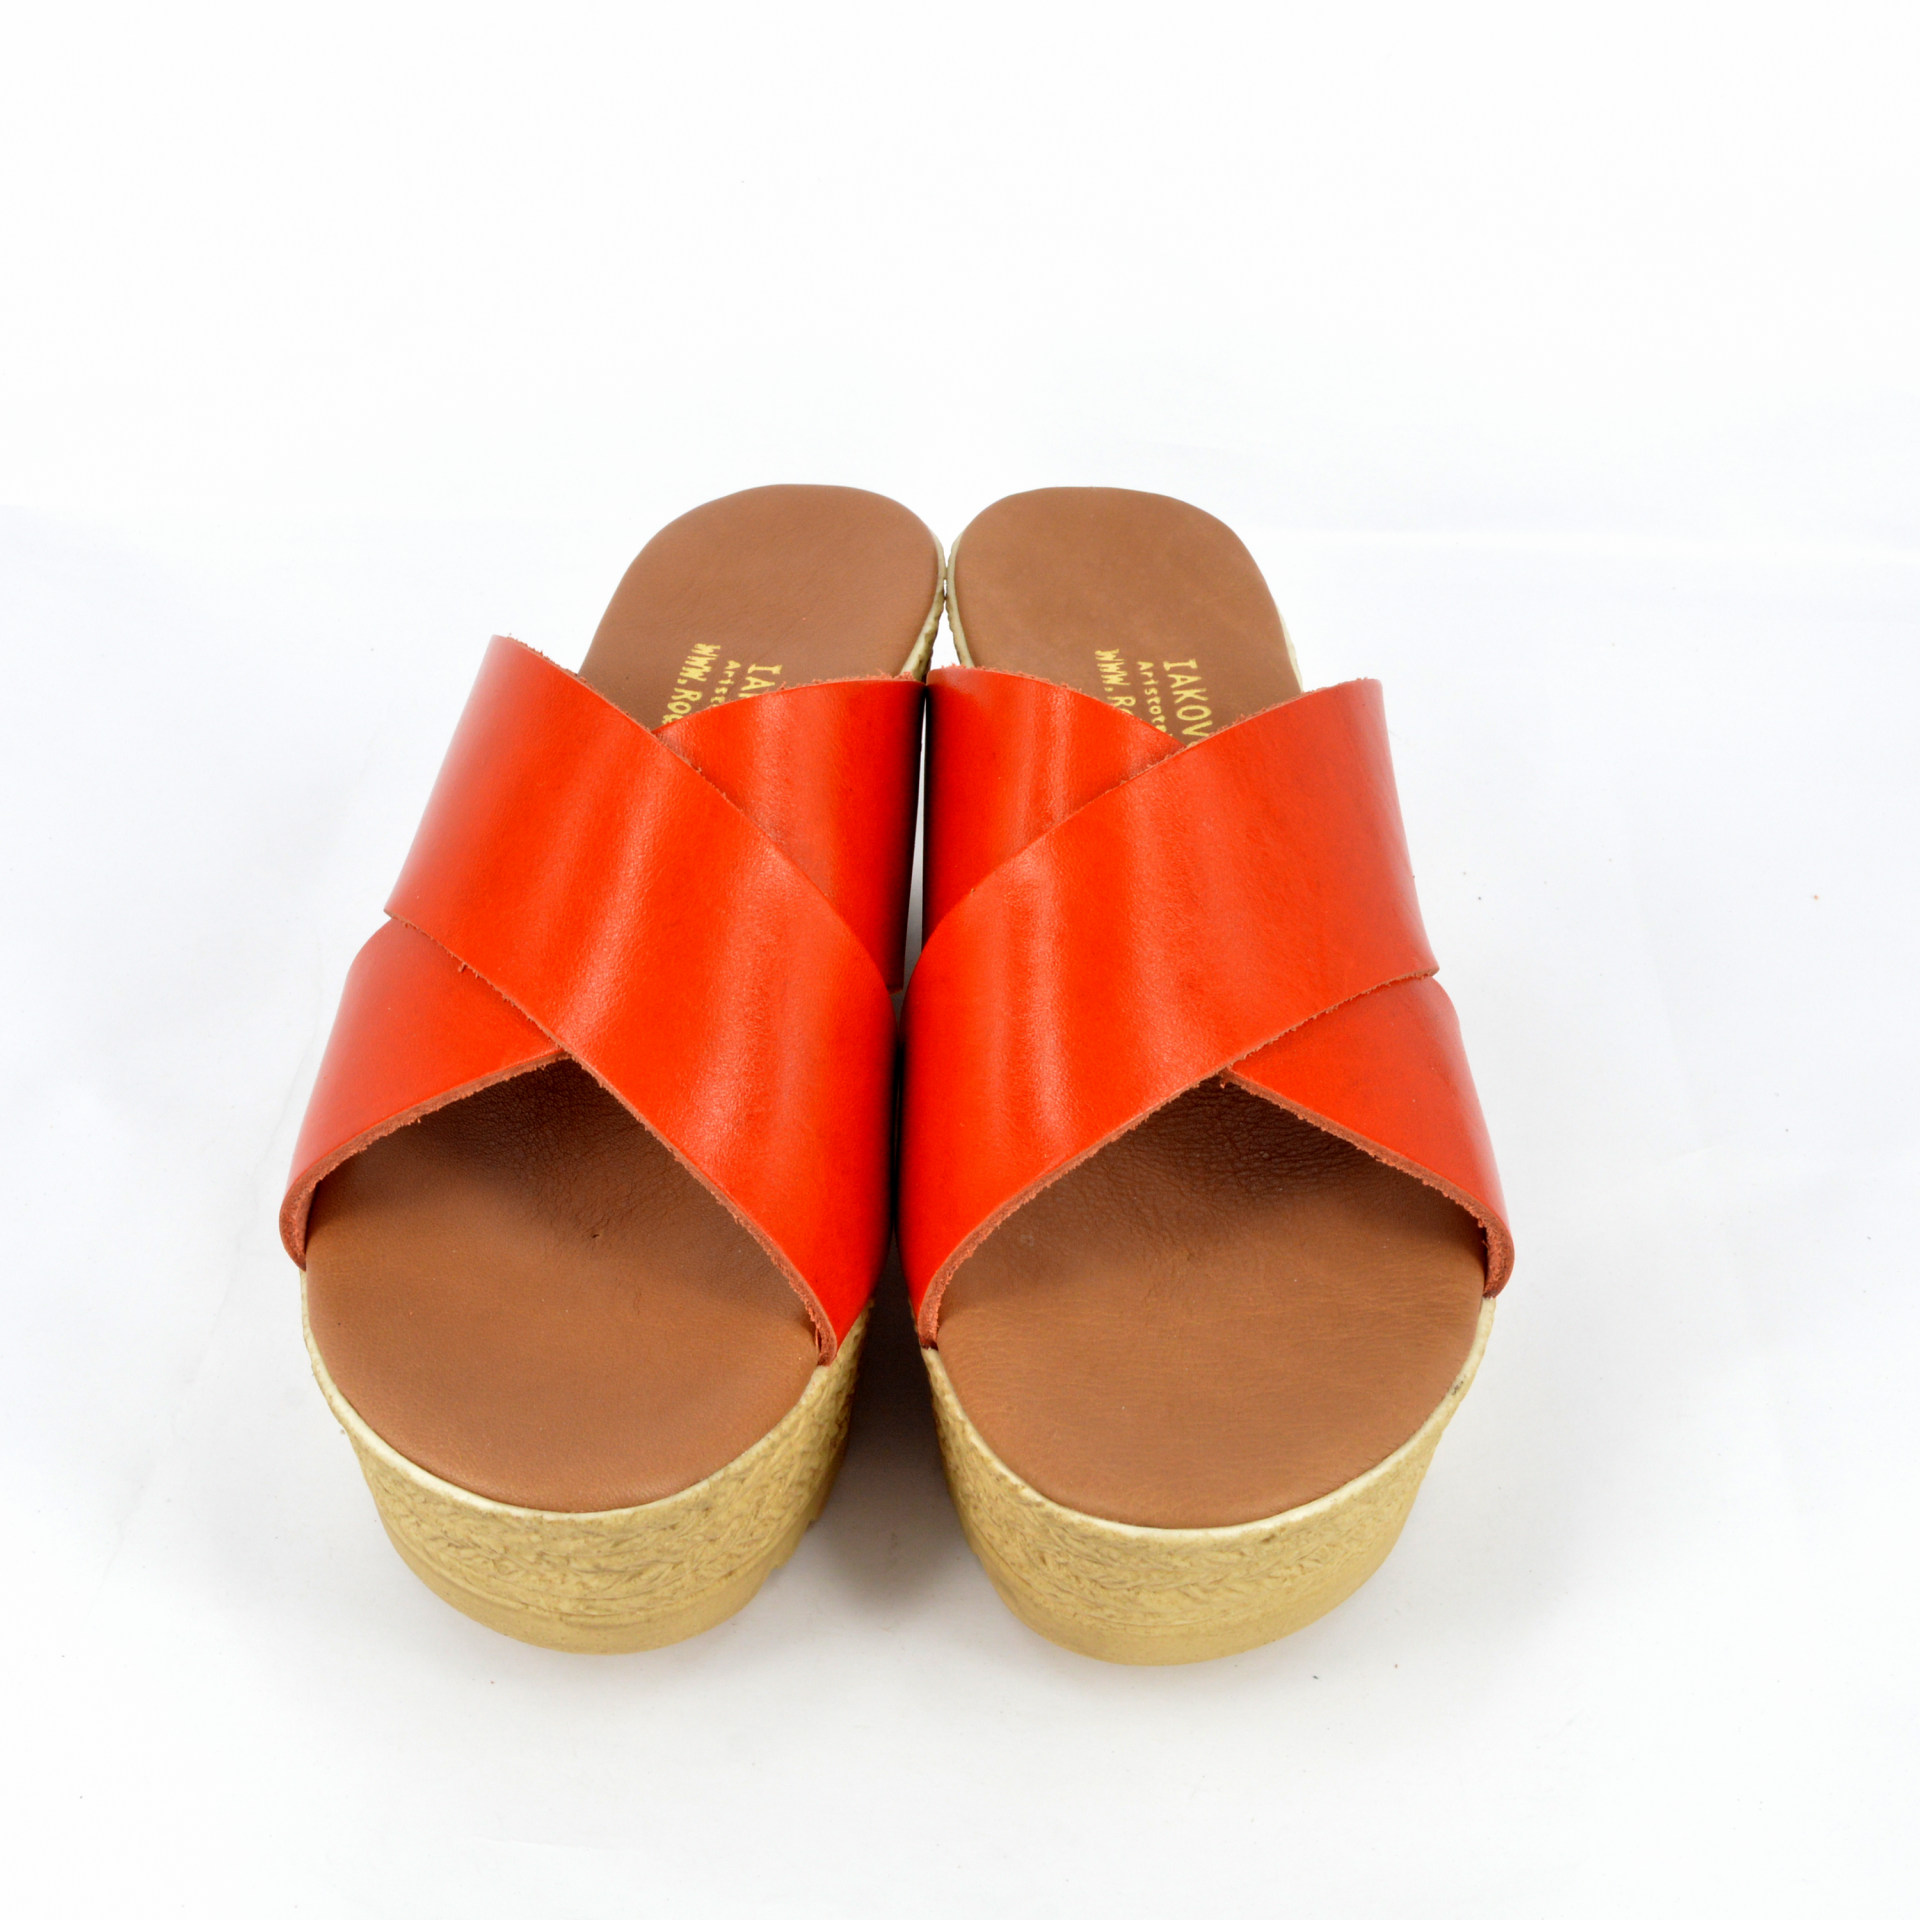 MICRA MICRA 18 Rodos Sandals - IAKOVOS Hand Made Sandals